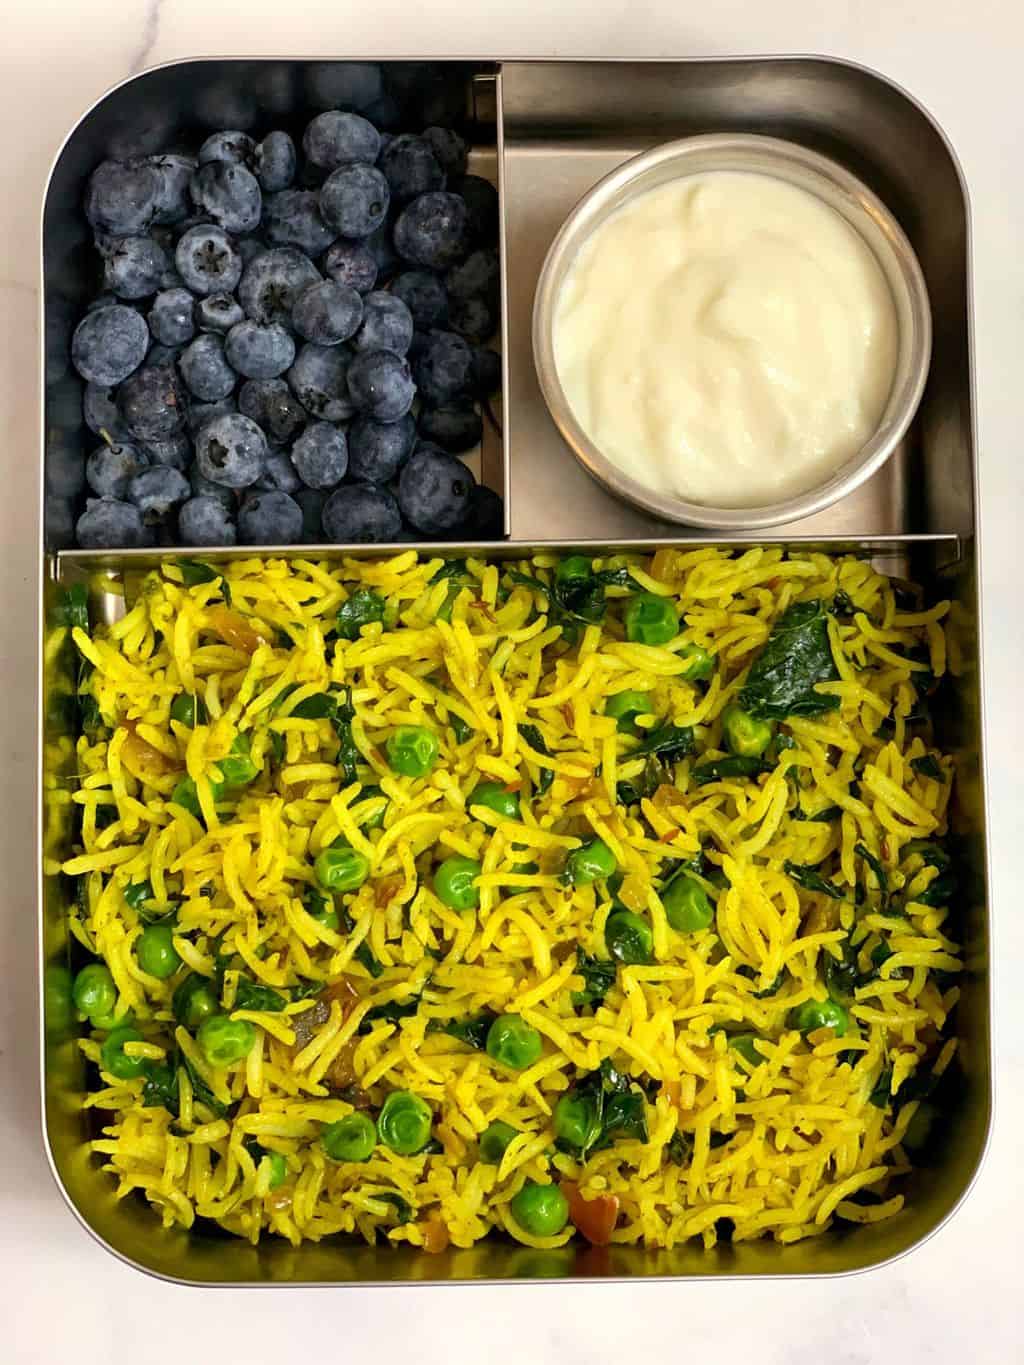 kids lunch box moringa rice ,yogurt and blueberries served in a steel bento box